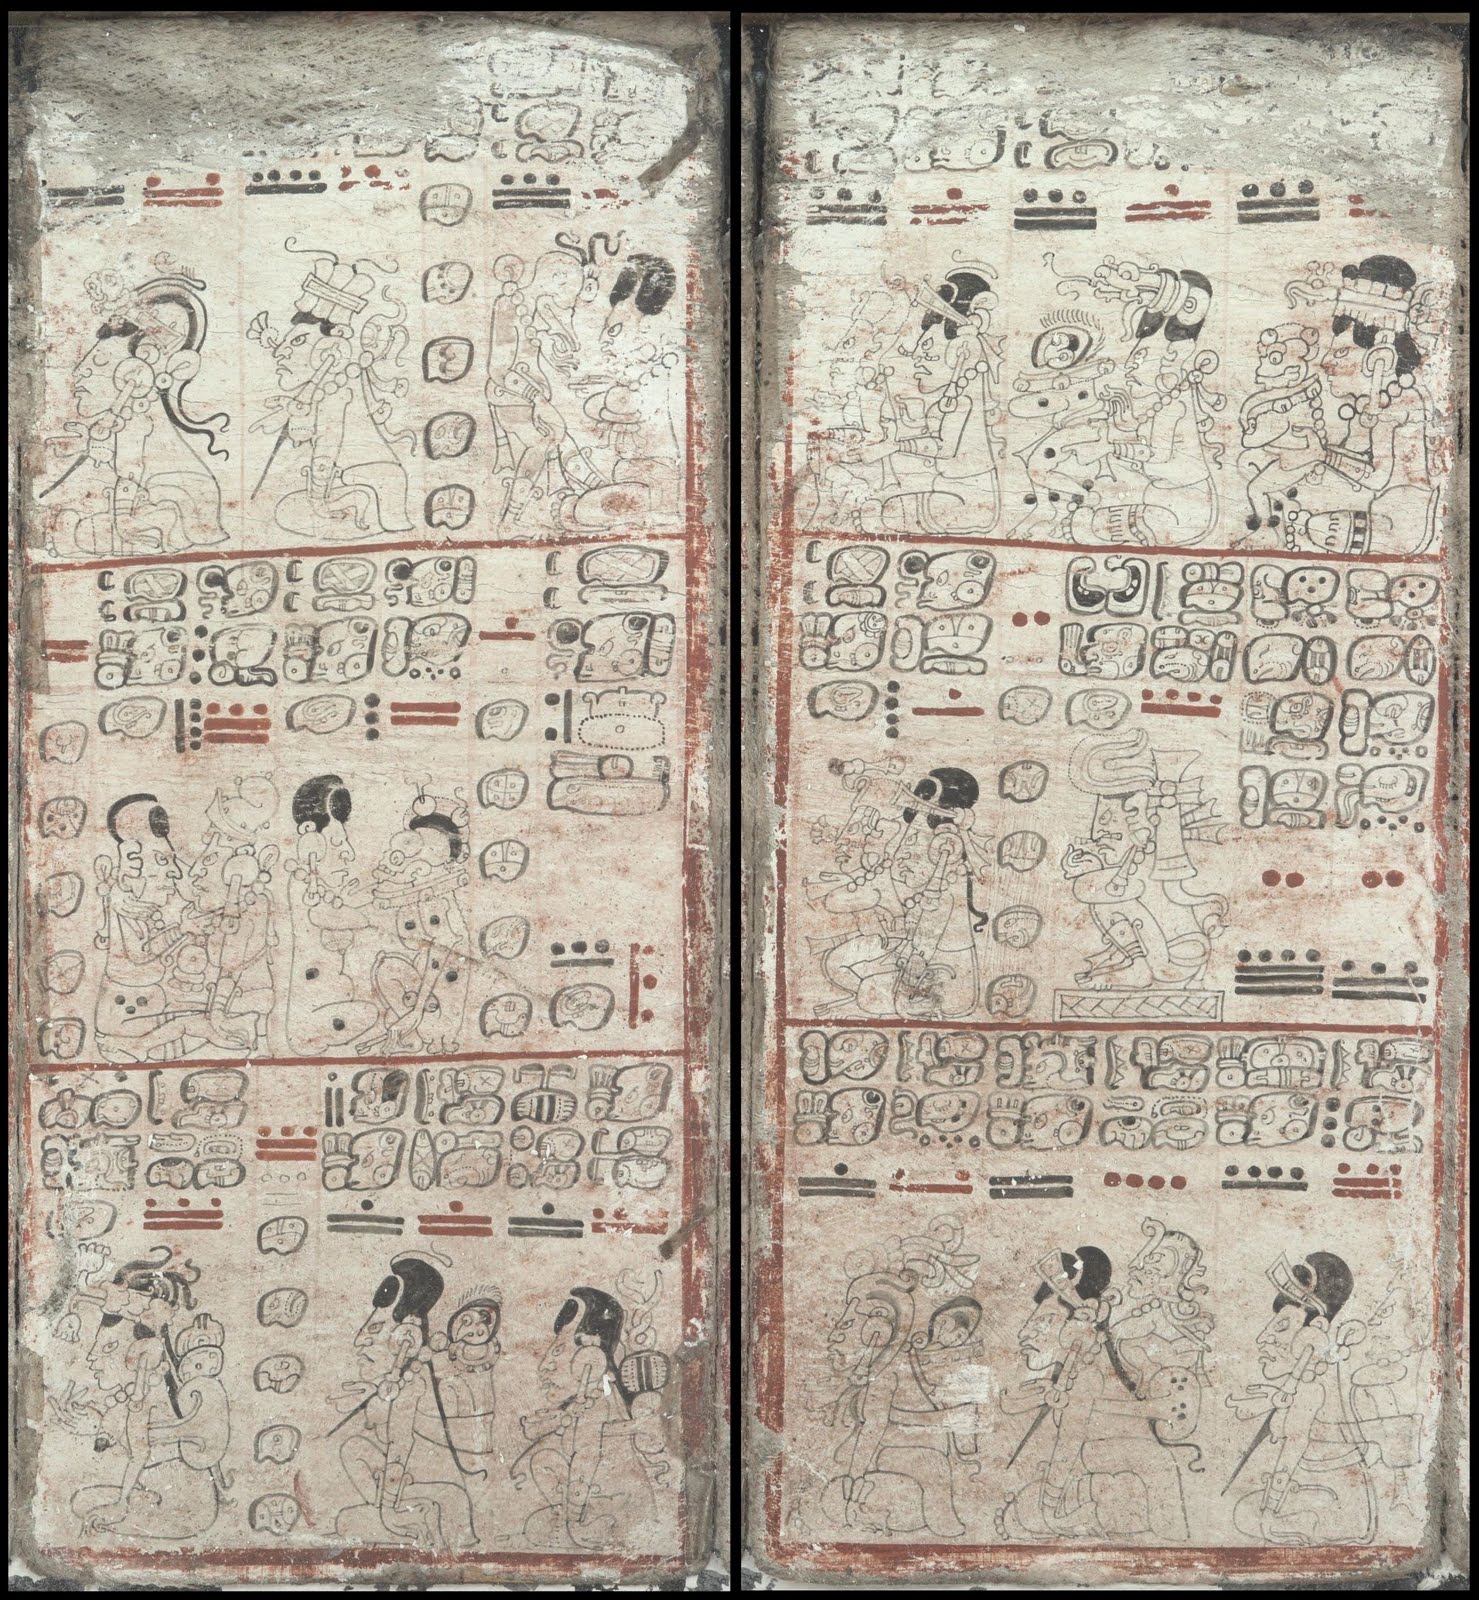 Mayan codex Dresden - The Moon Goddess; illness and birth